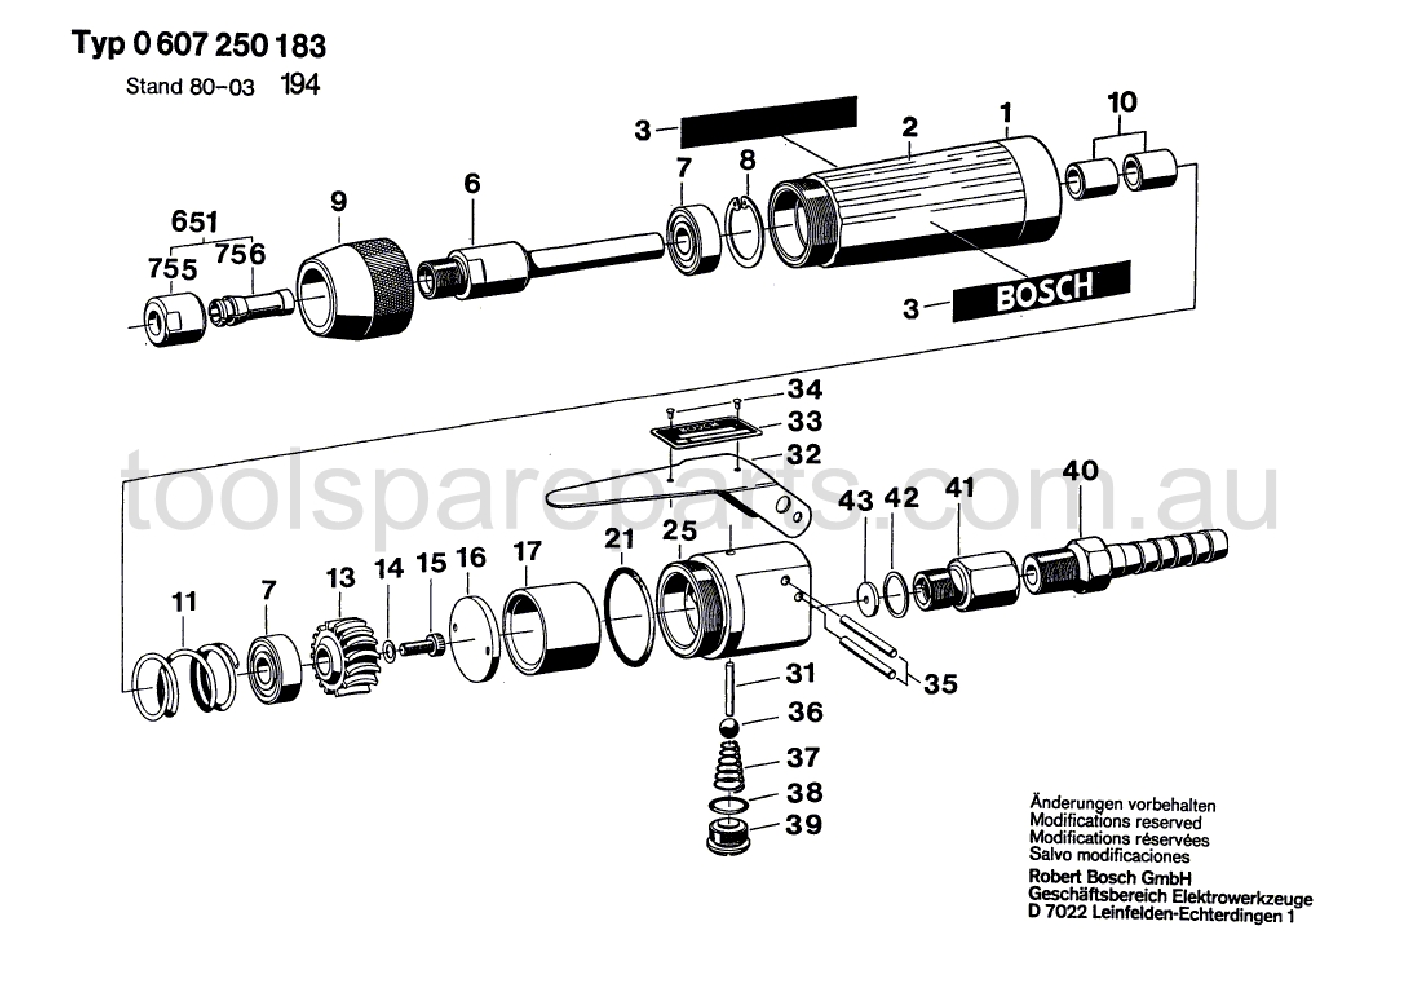 Bosch 50 WATT-SERIE 0607250194  Diagram 1